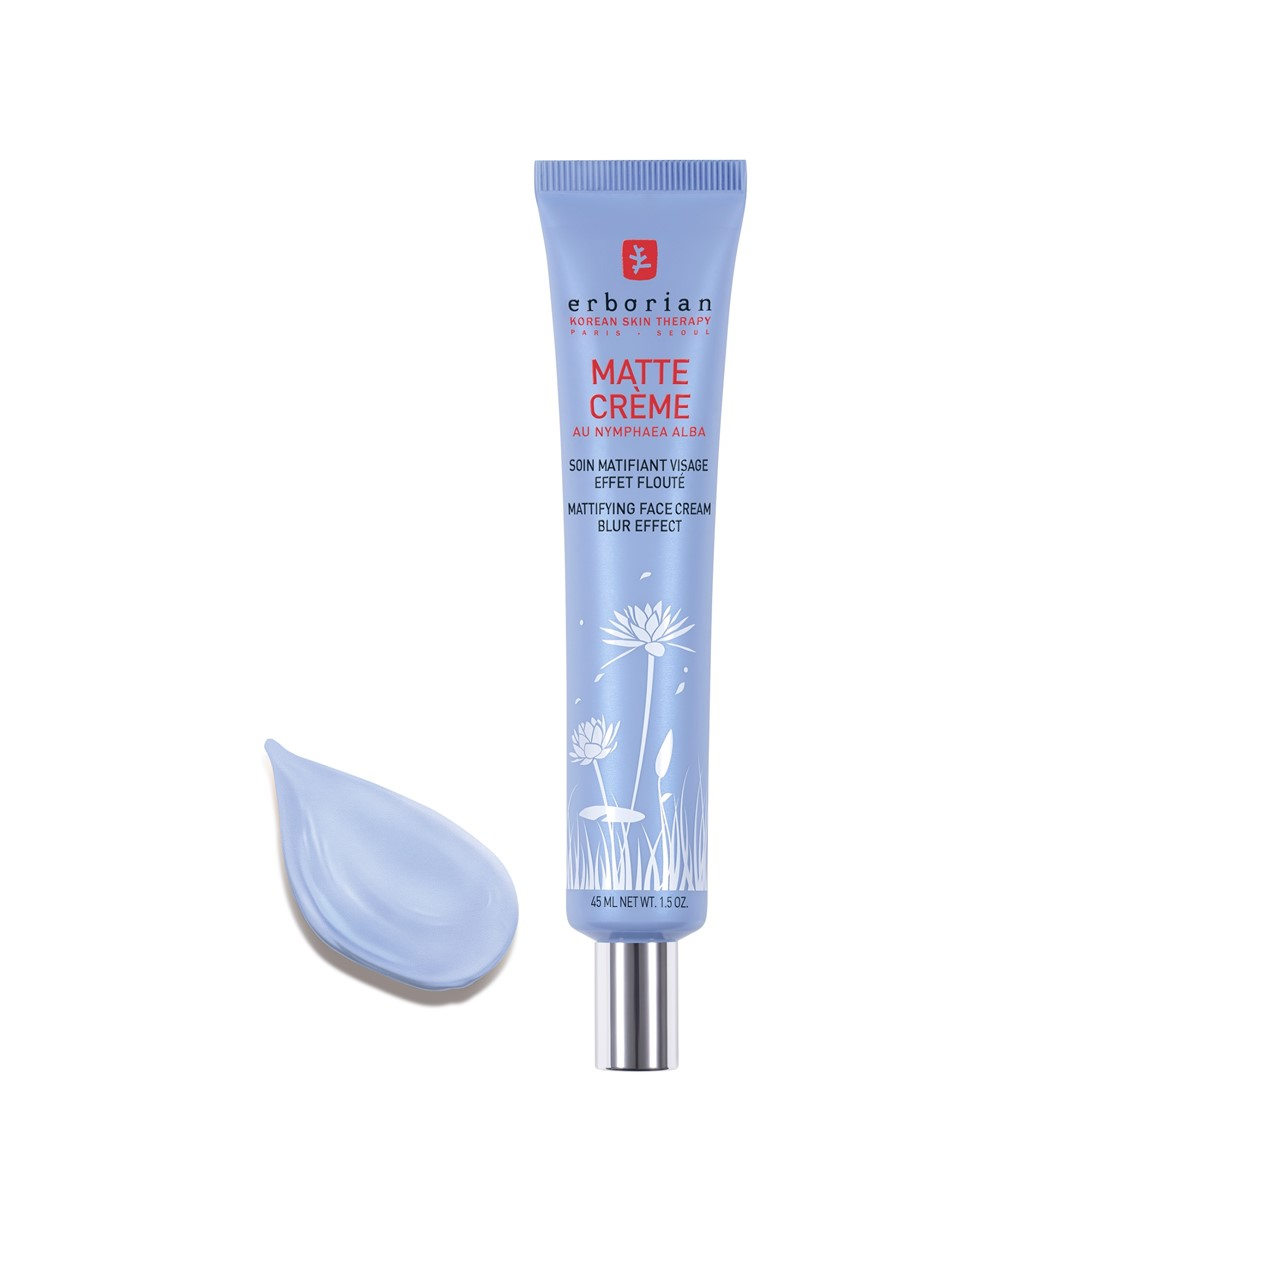 Erborian Matte Crème Mattifying Face Cream Blur Effect 45ml (1.52fl oz)